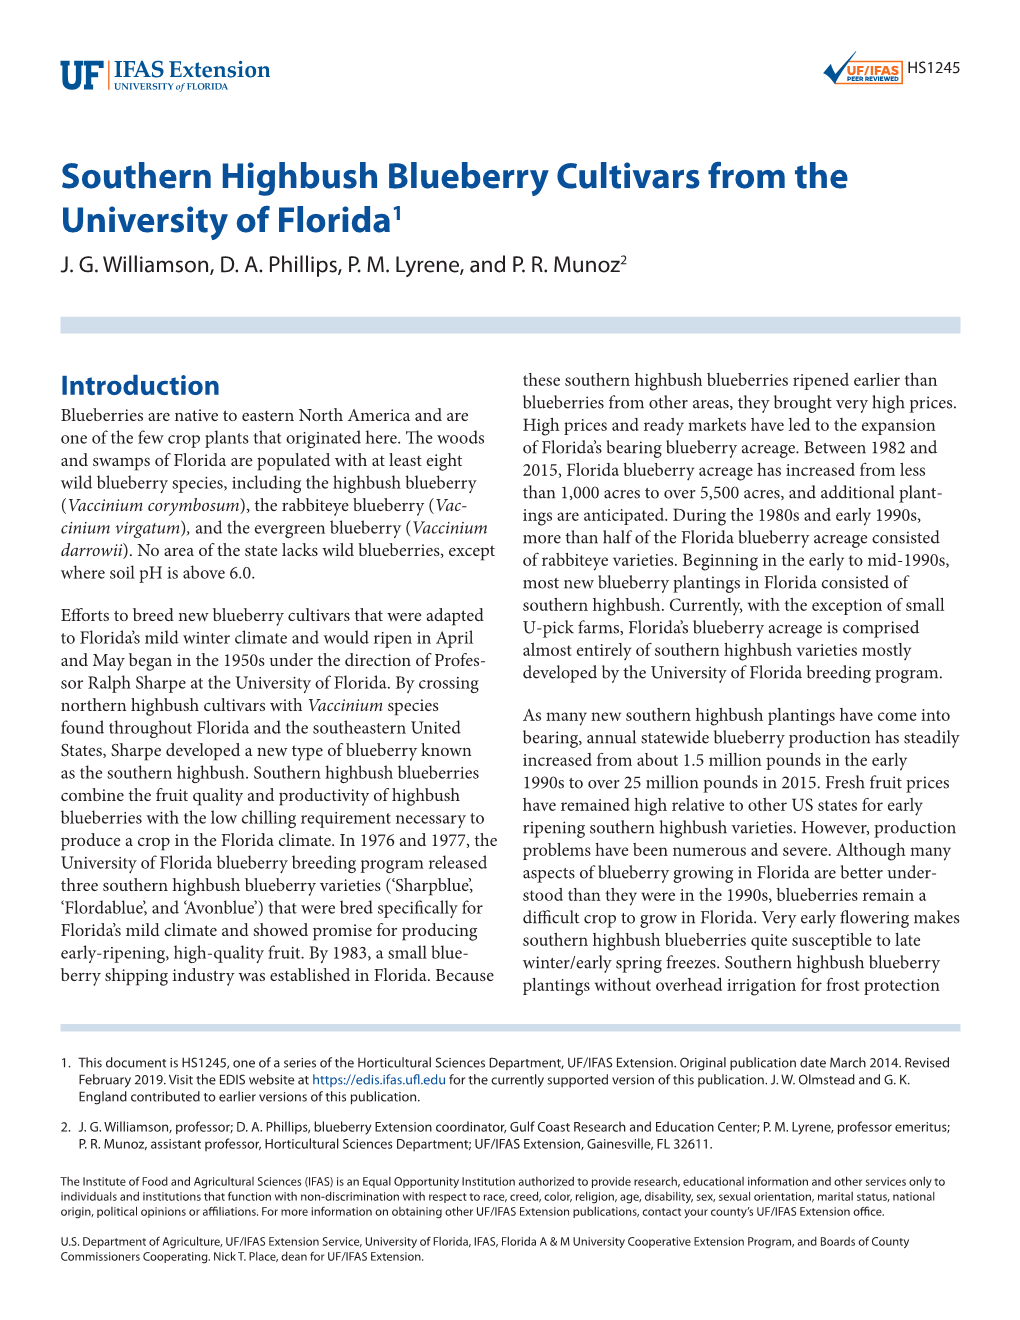 Southern Highbush Blueberry Cultivars from the University of Florida1 J